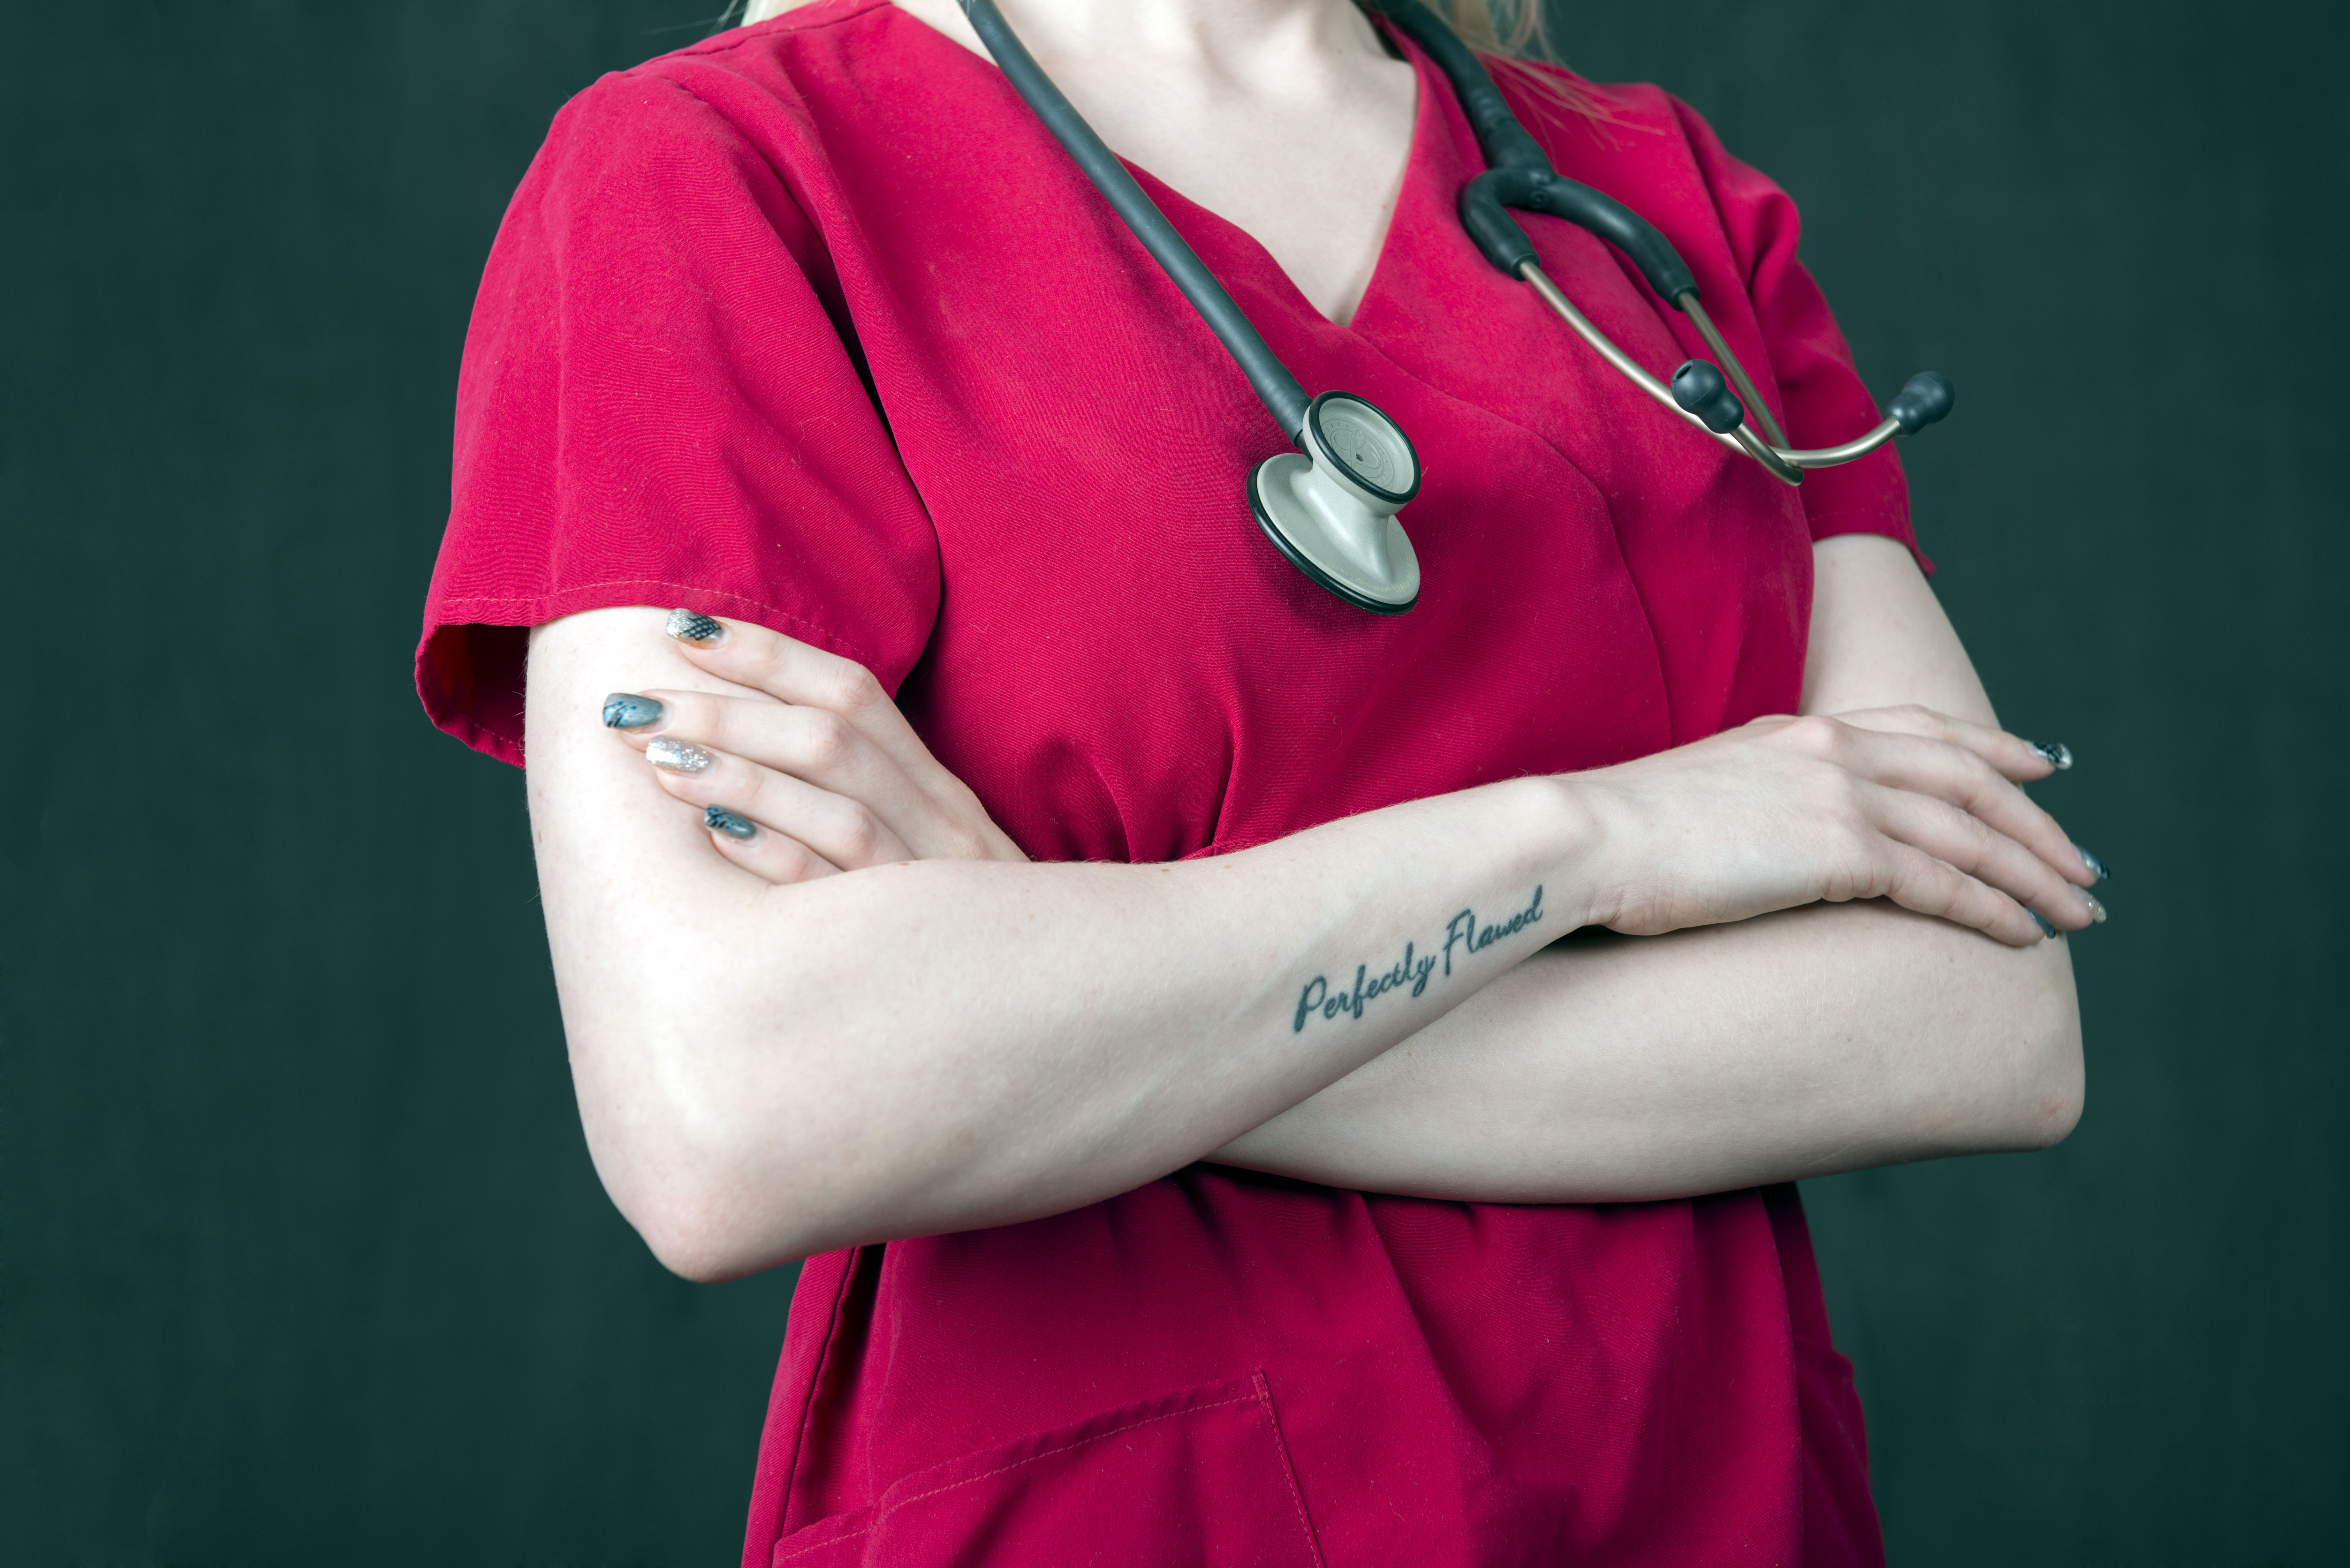 Careplans Blog Nurses, Tattoos, & Piercings: Unprofessional or  Self-Expression? - Careplans Blog